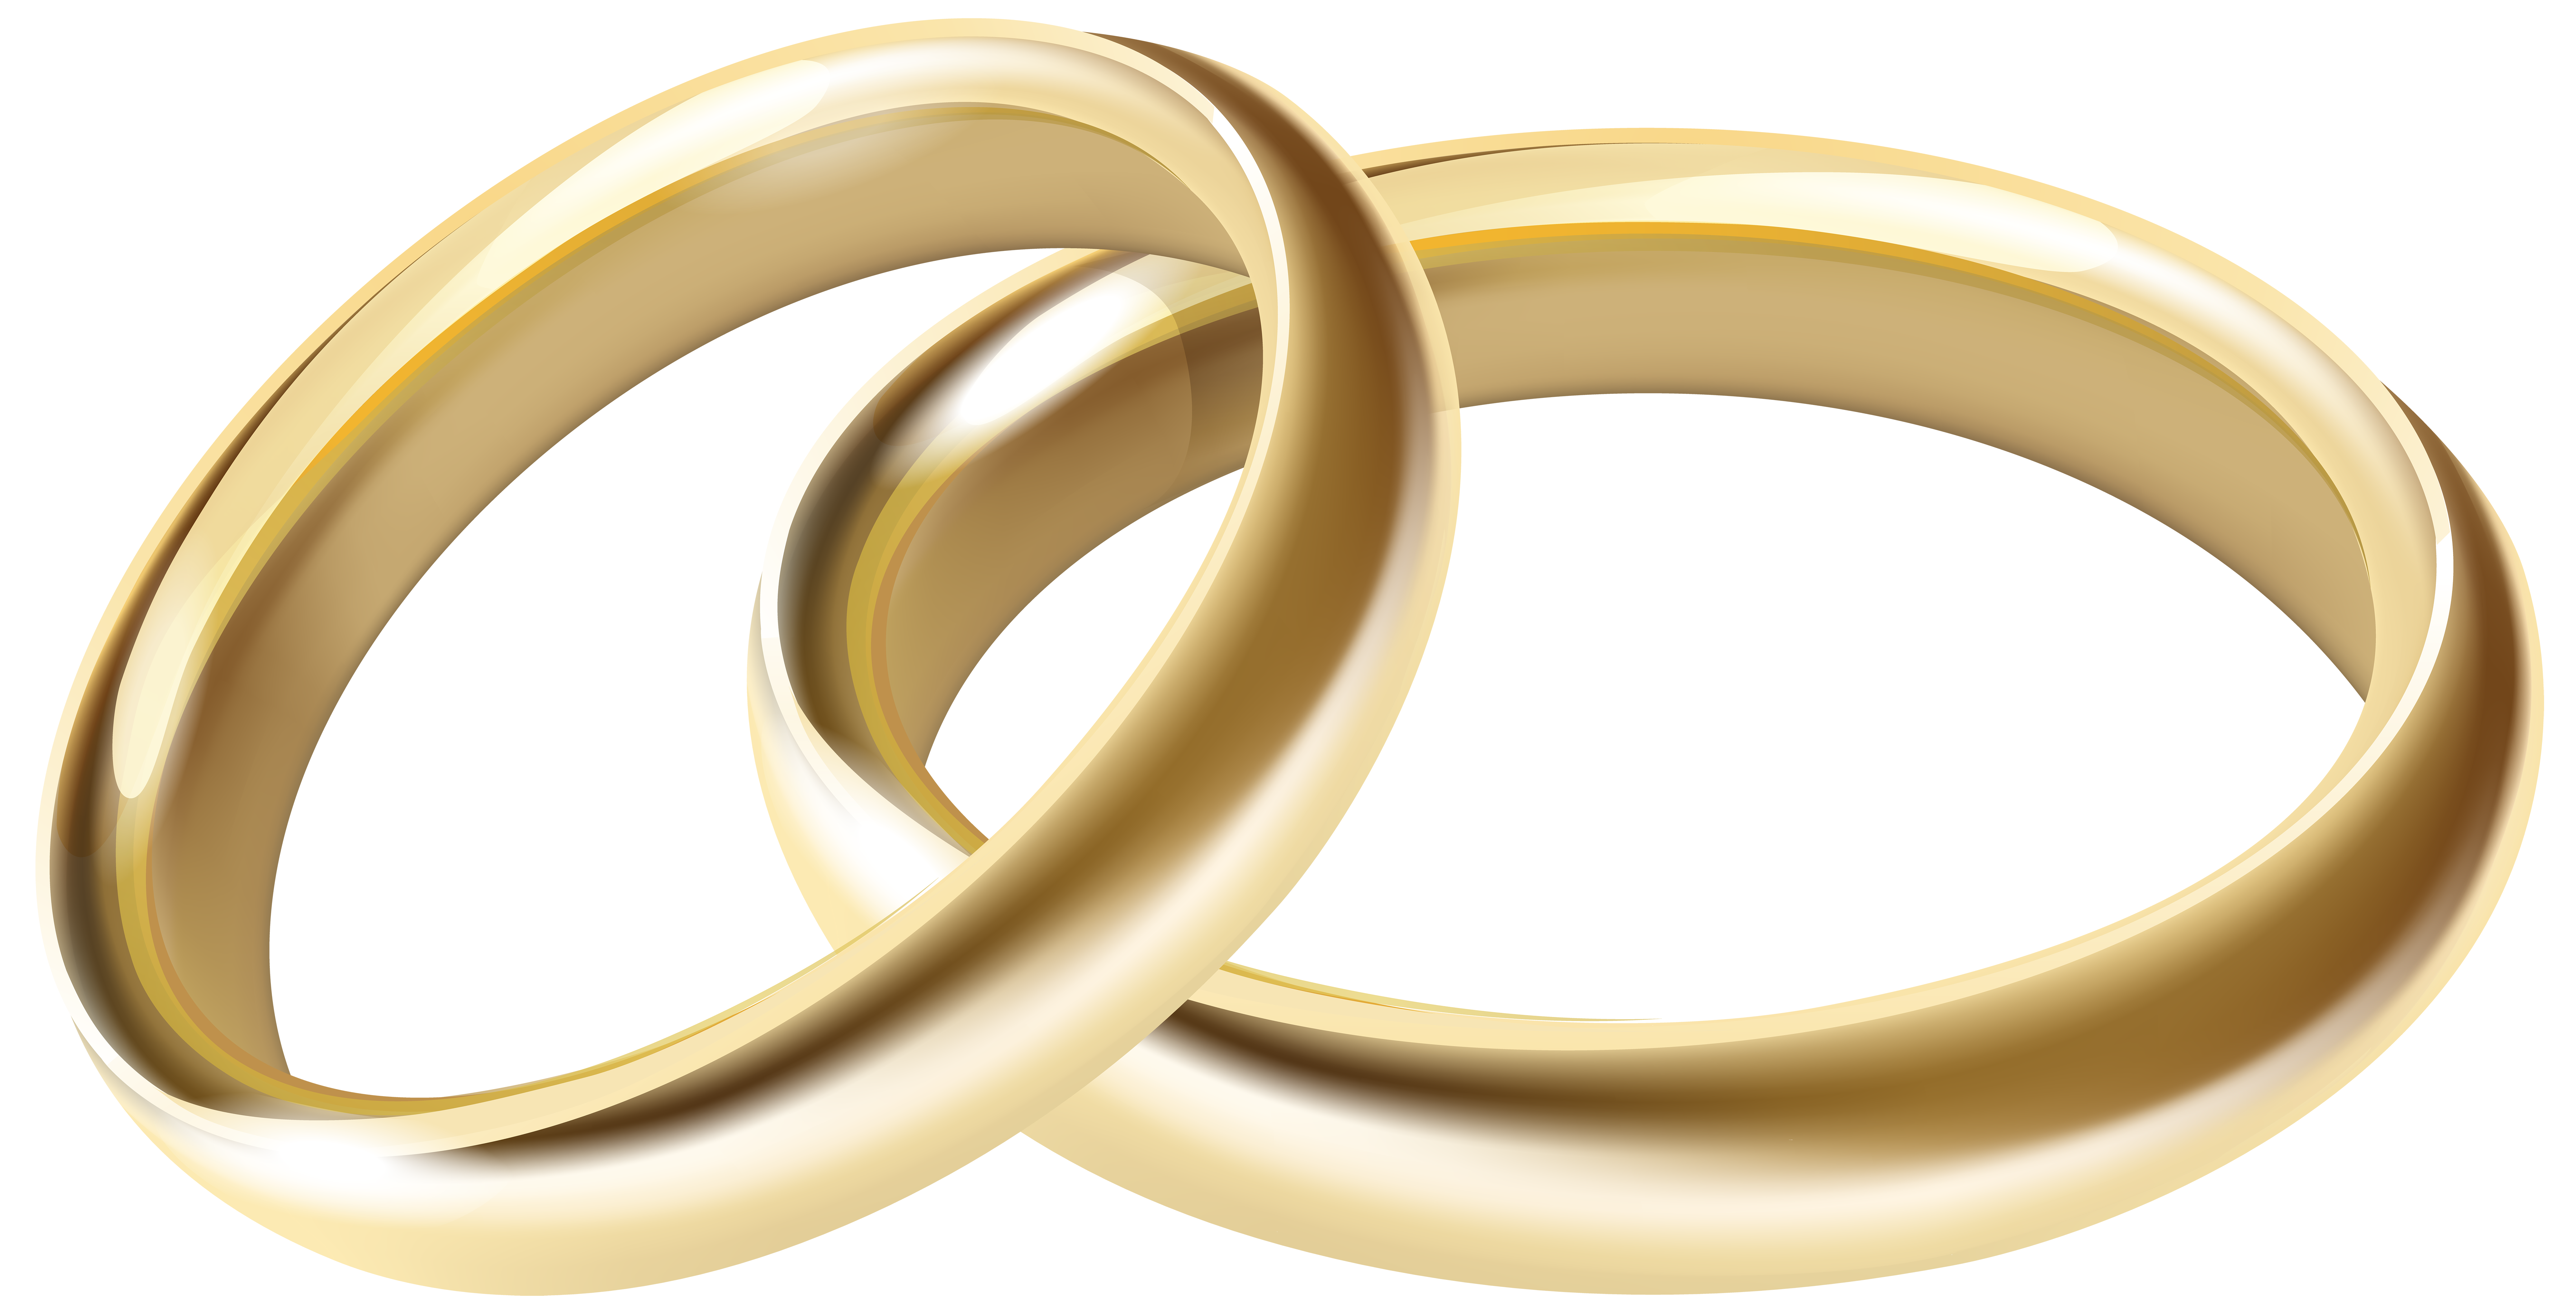  Wedding  Rings  Transparent  Background  Png Wedding  Rings  